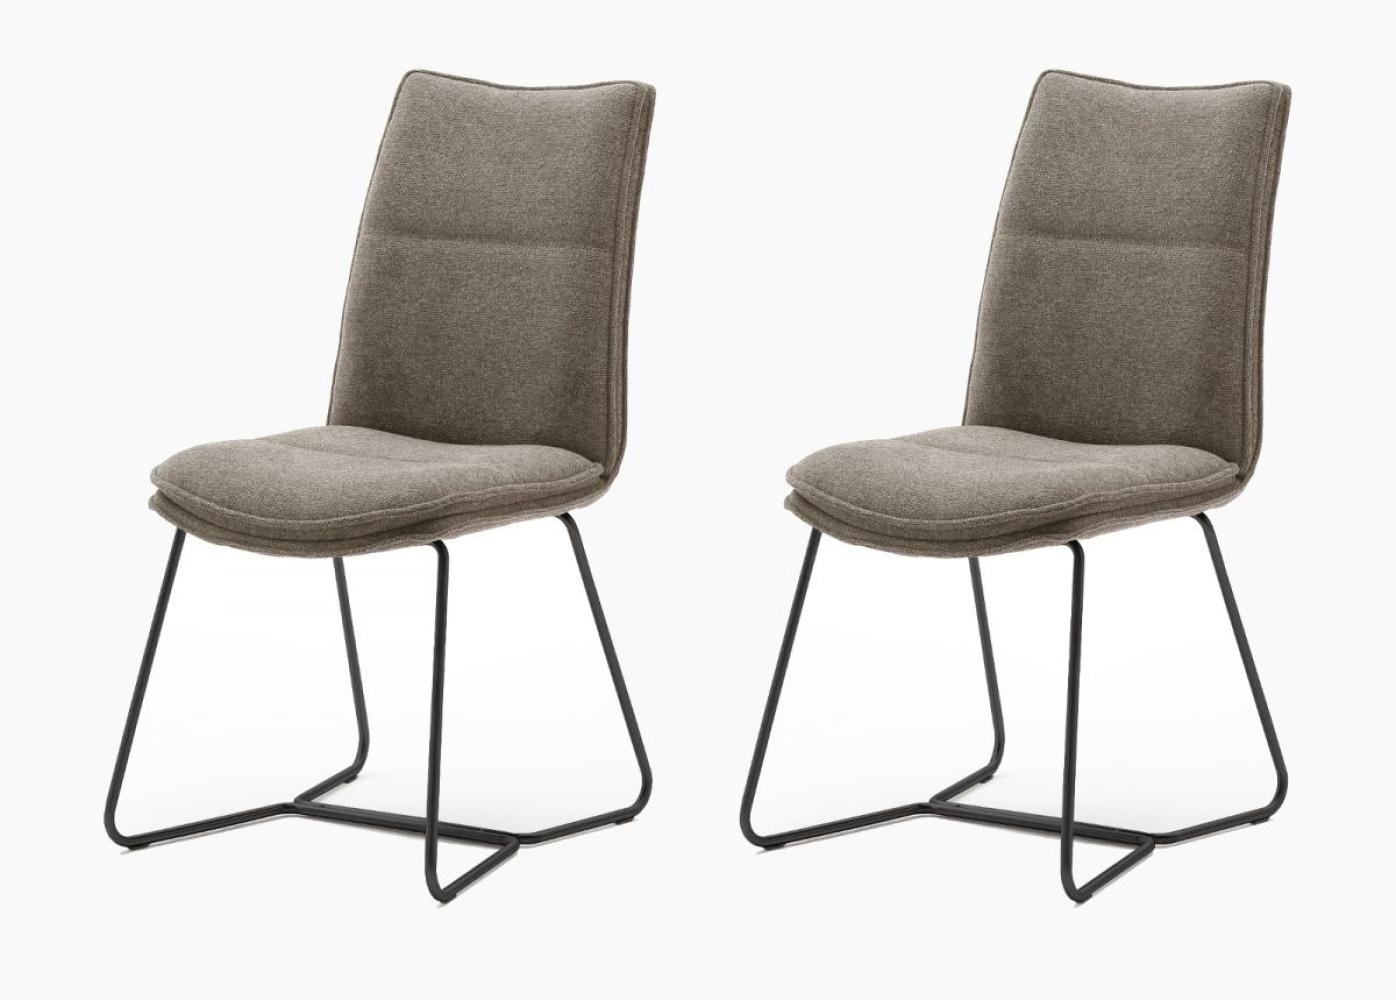 2 x Stuhl Hampton cappuccino Kufengestell Metall schwarz lackiert Bild 1